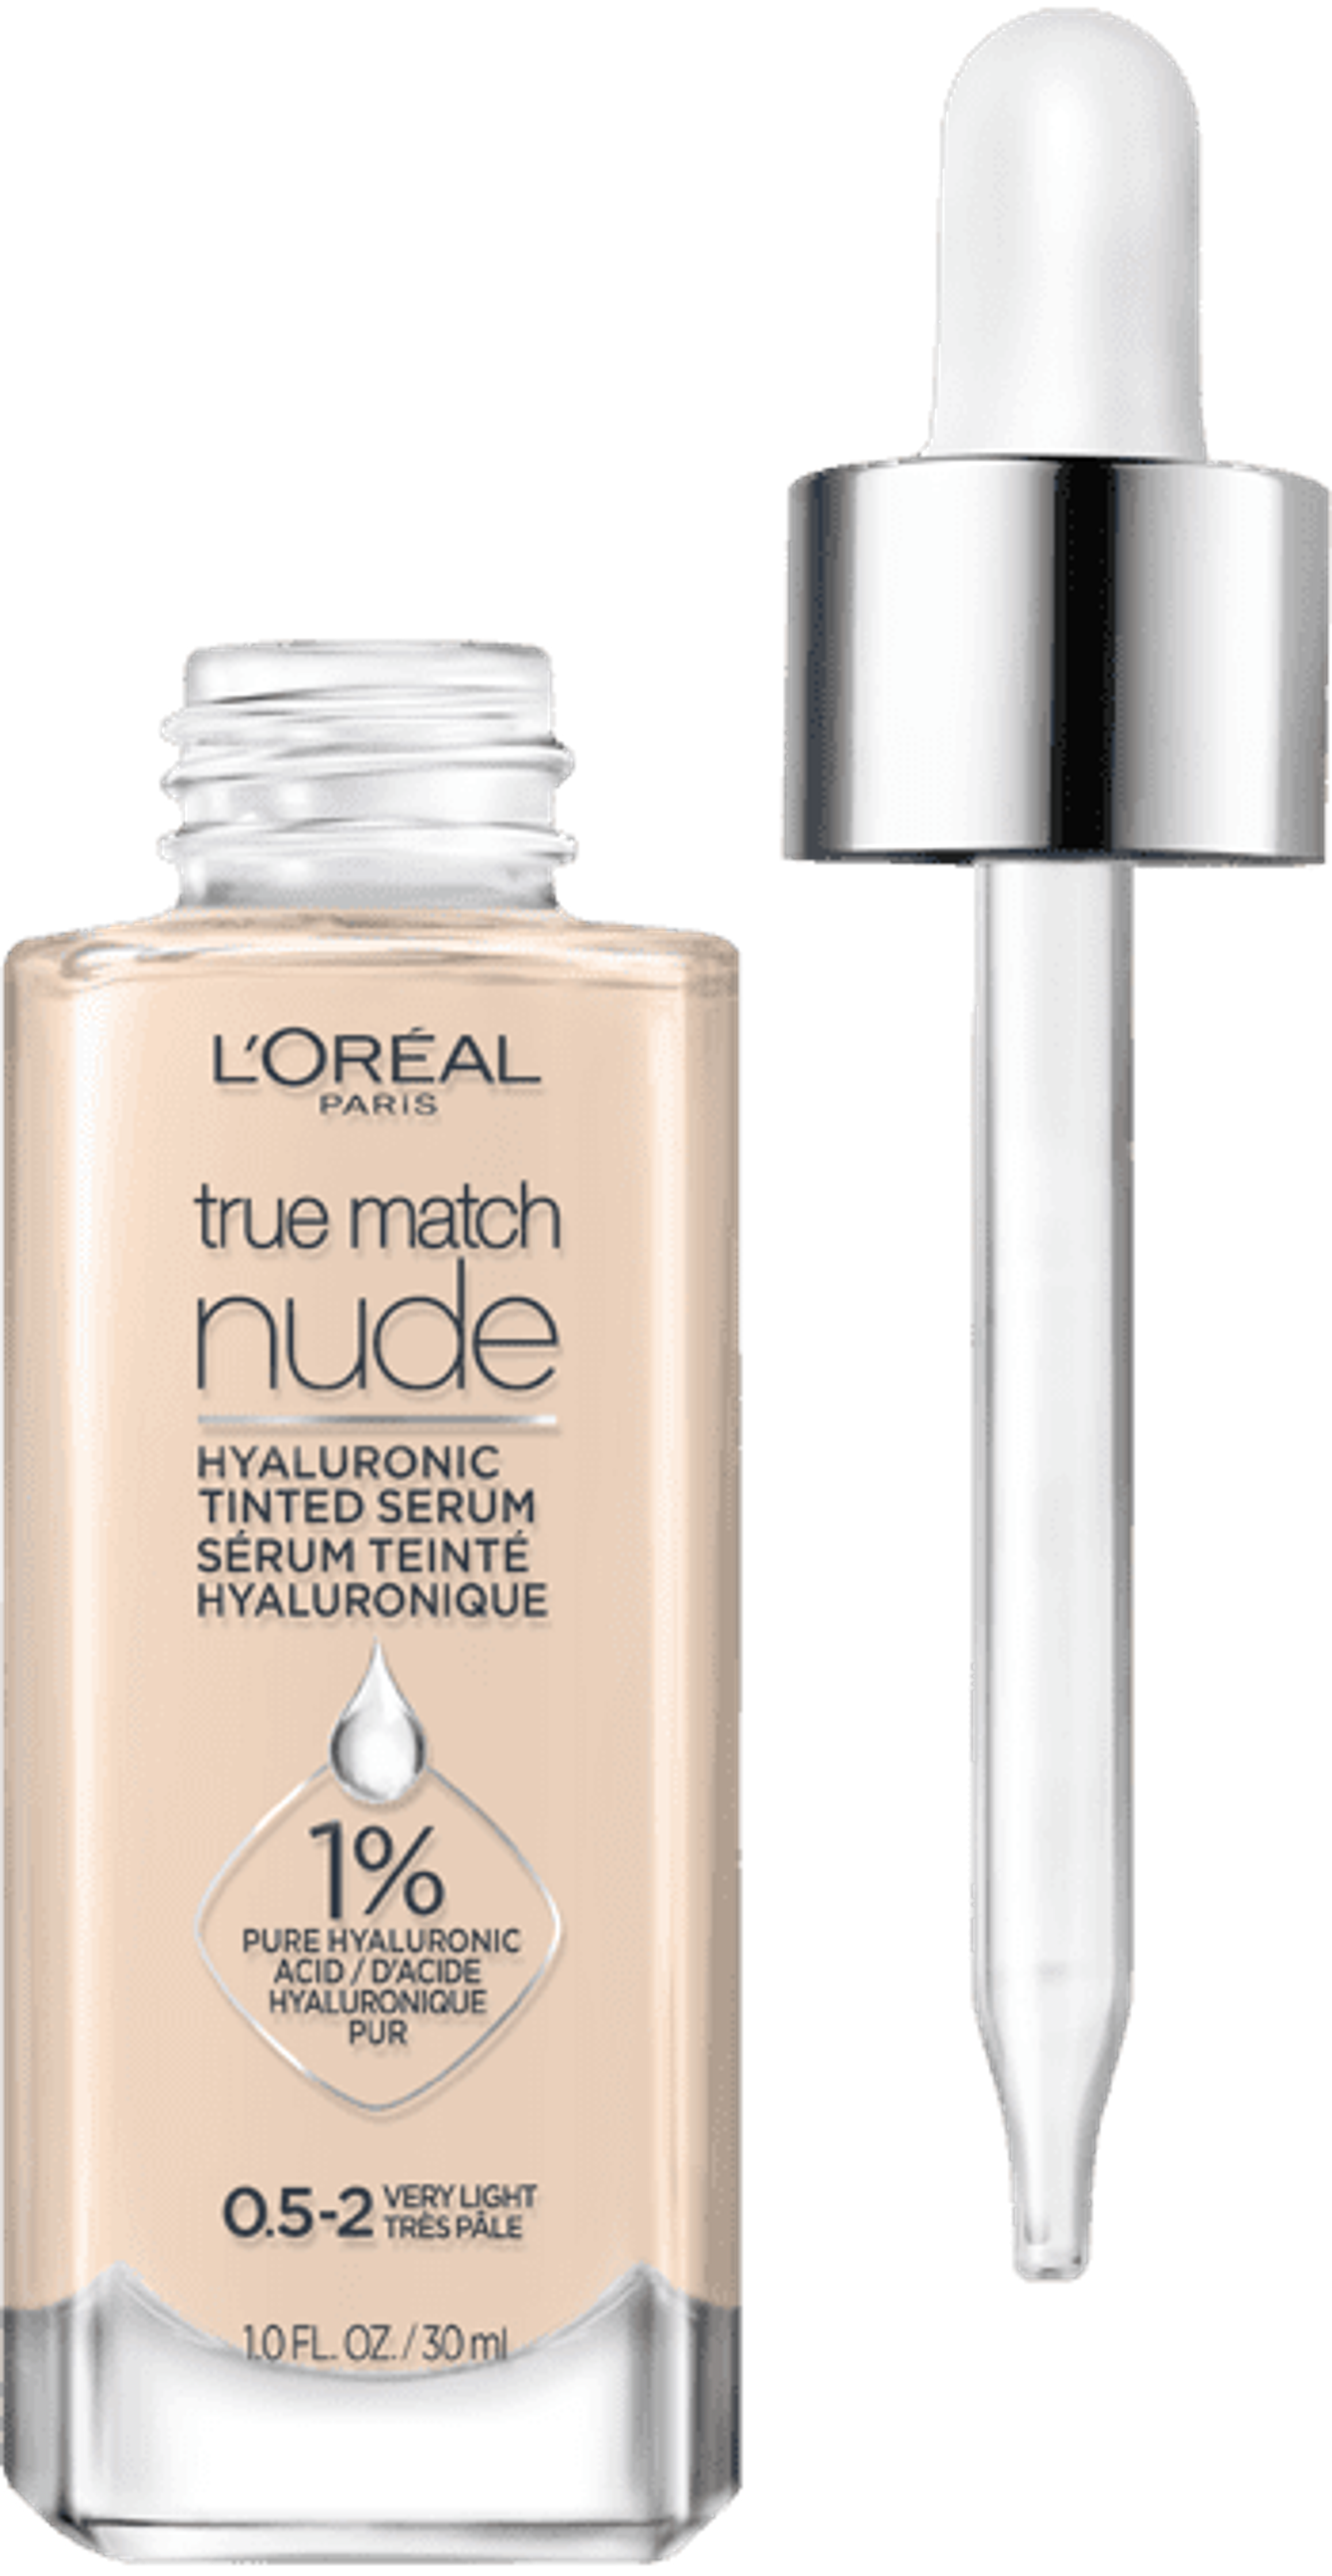 TrueMatch true-match-nude-hyaluronic-tinted-serum-hydrates-all-in-1